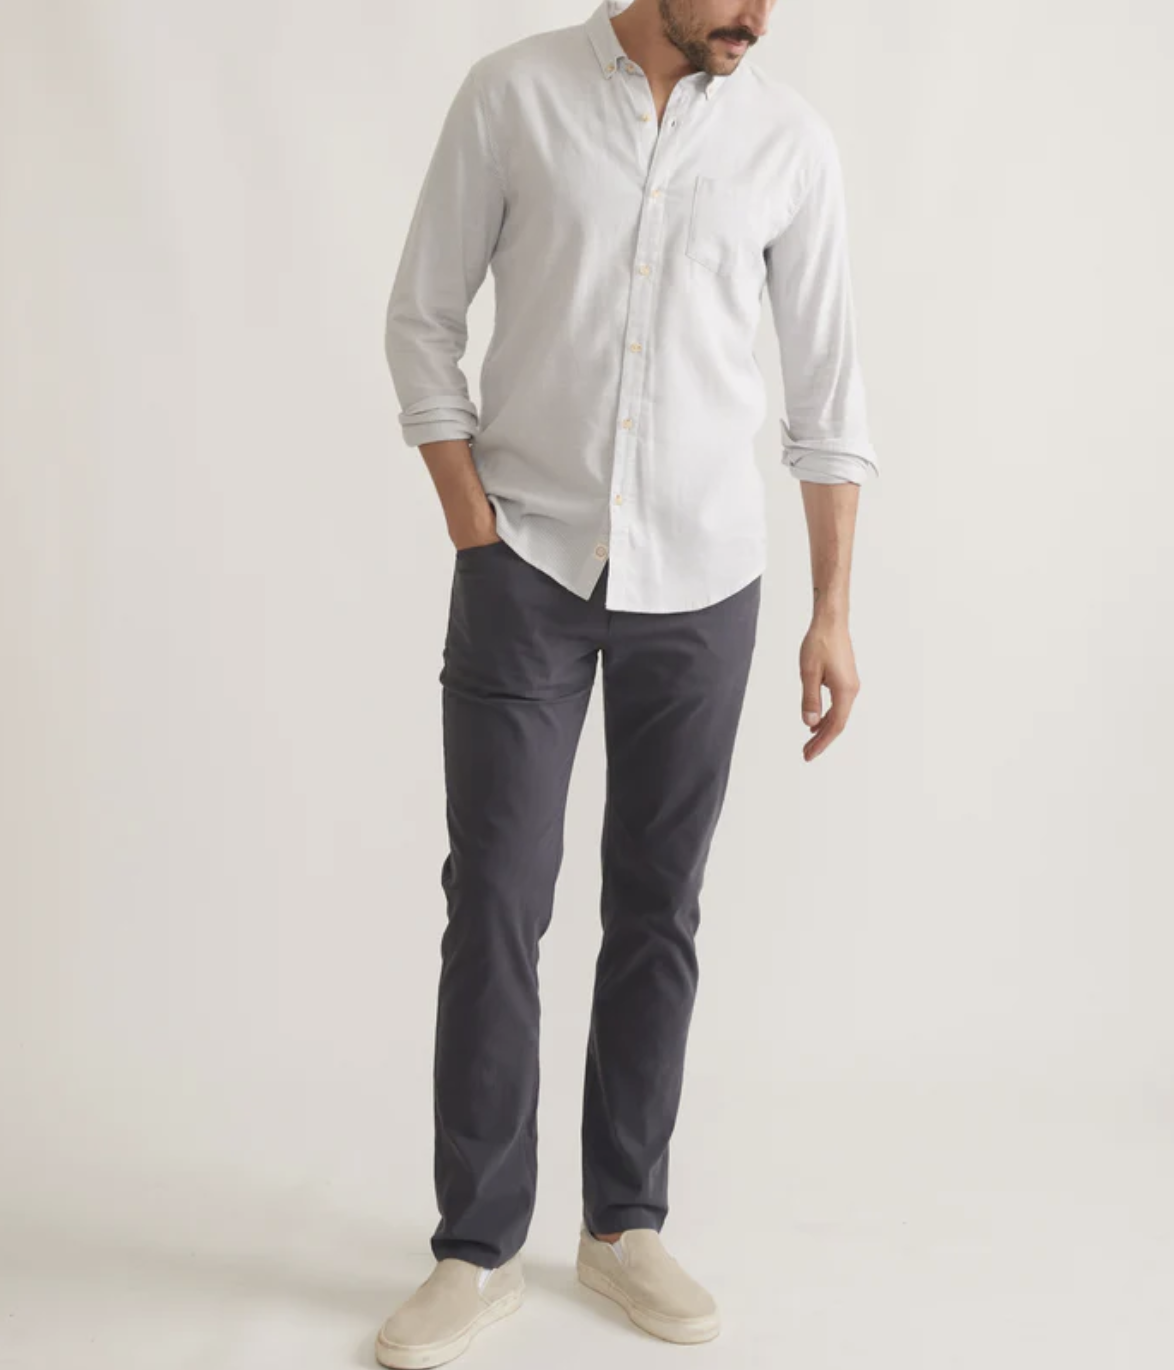 California Oxford Shirt - Grey Stripe